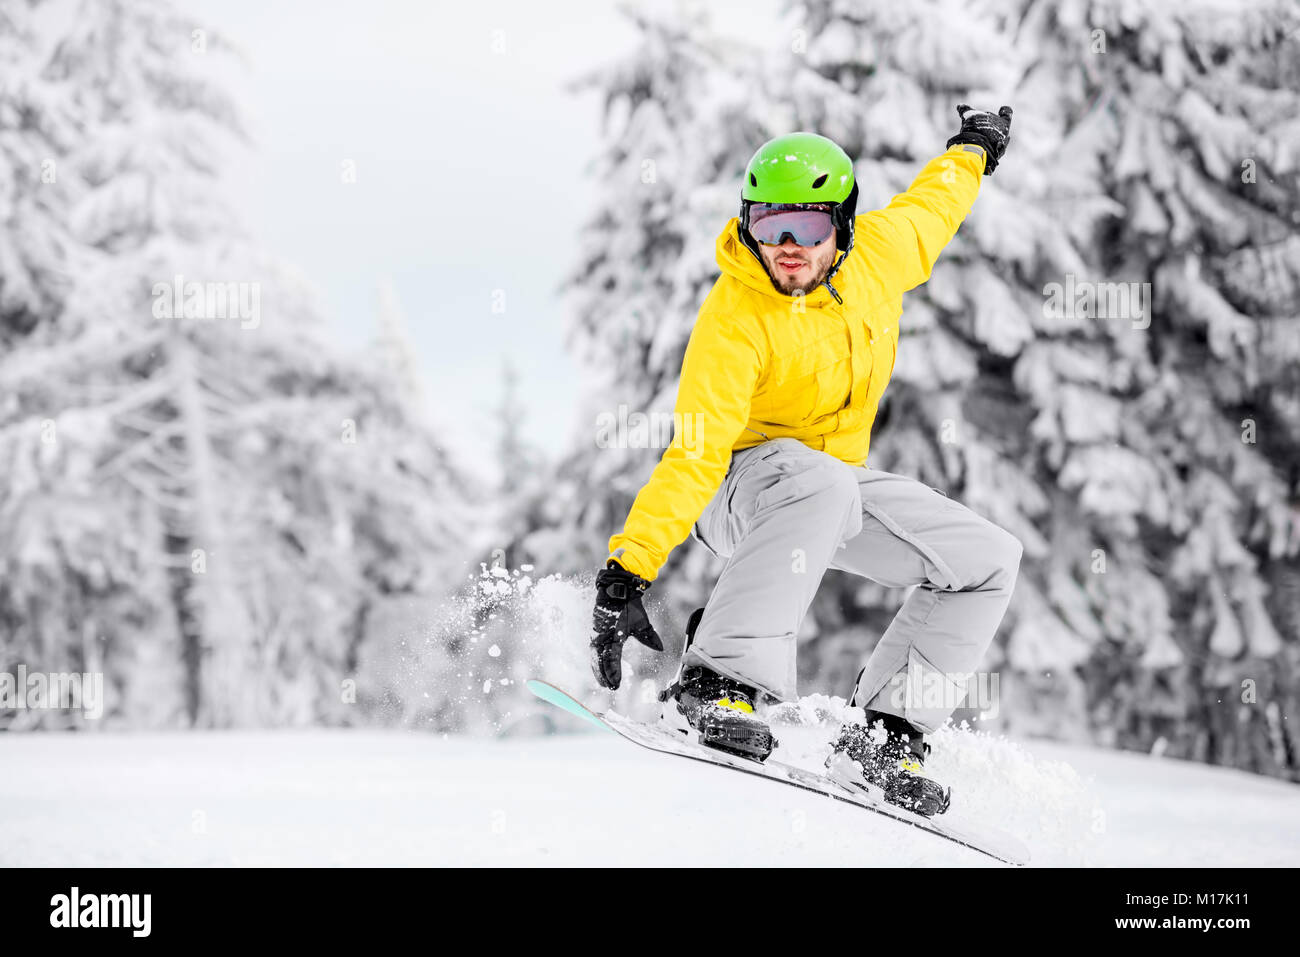 Man snowboarding at the mountains Stock Photo